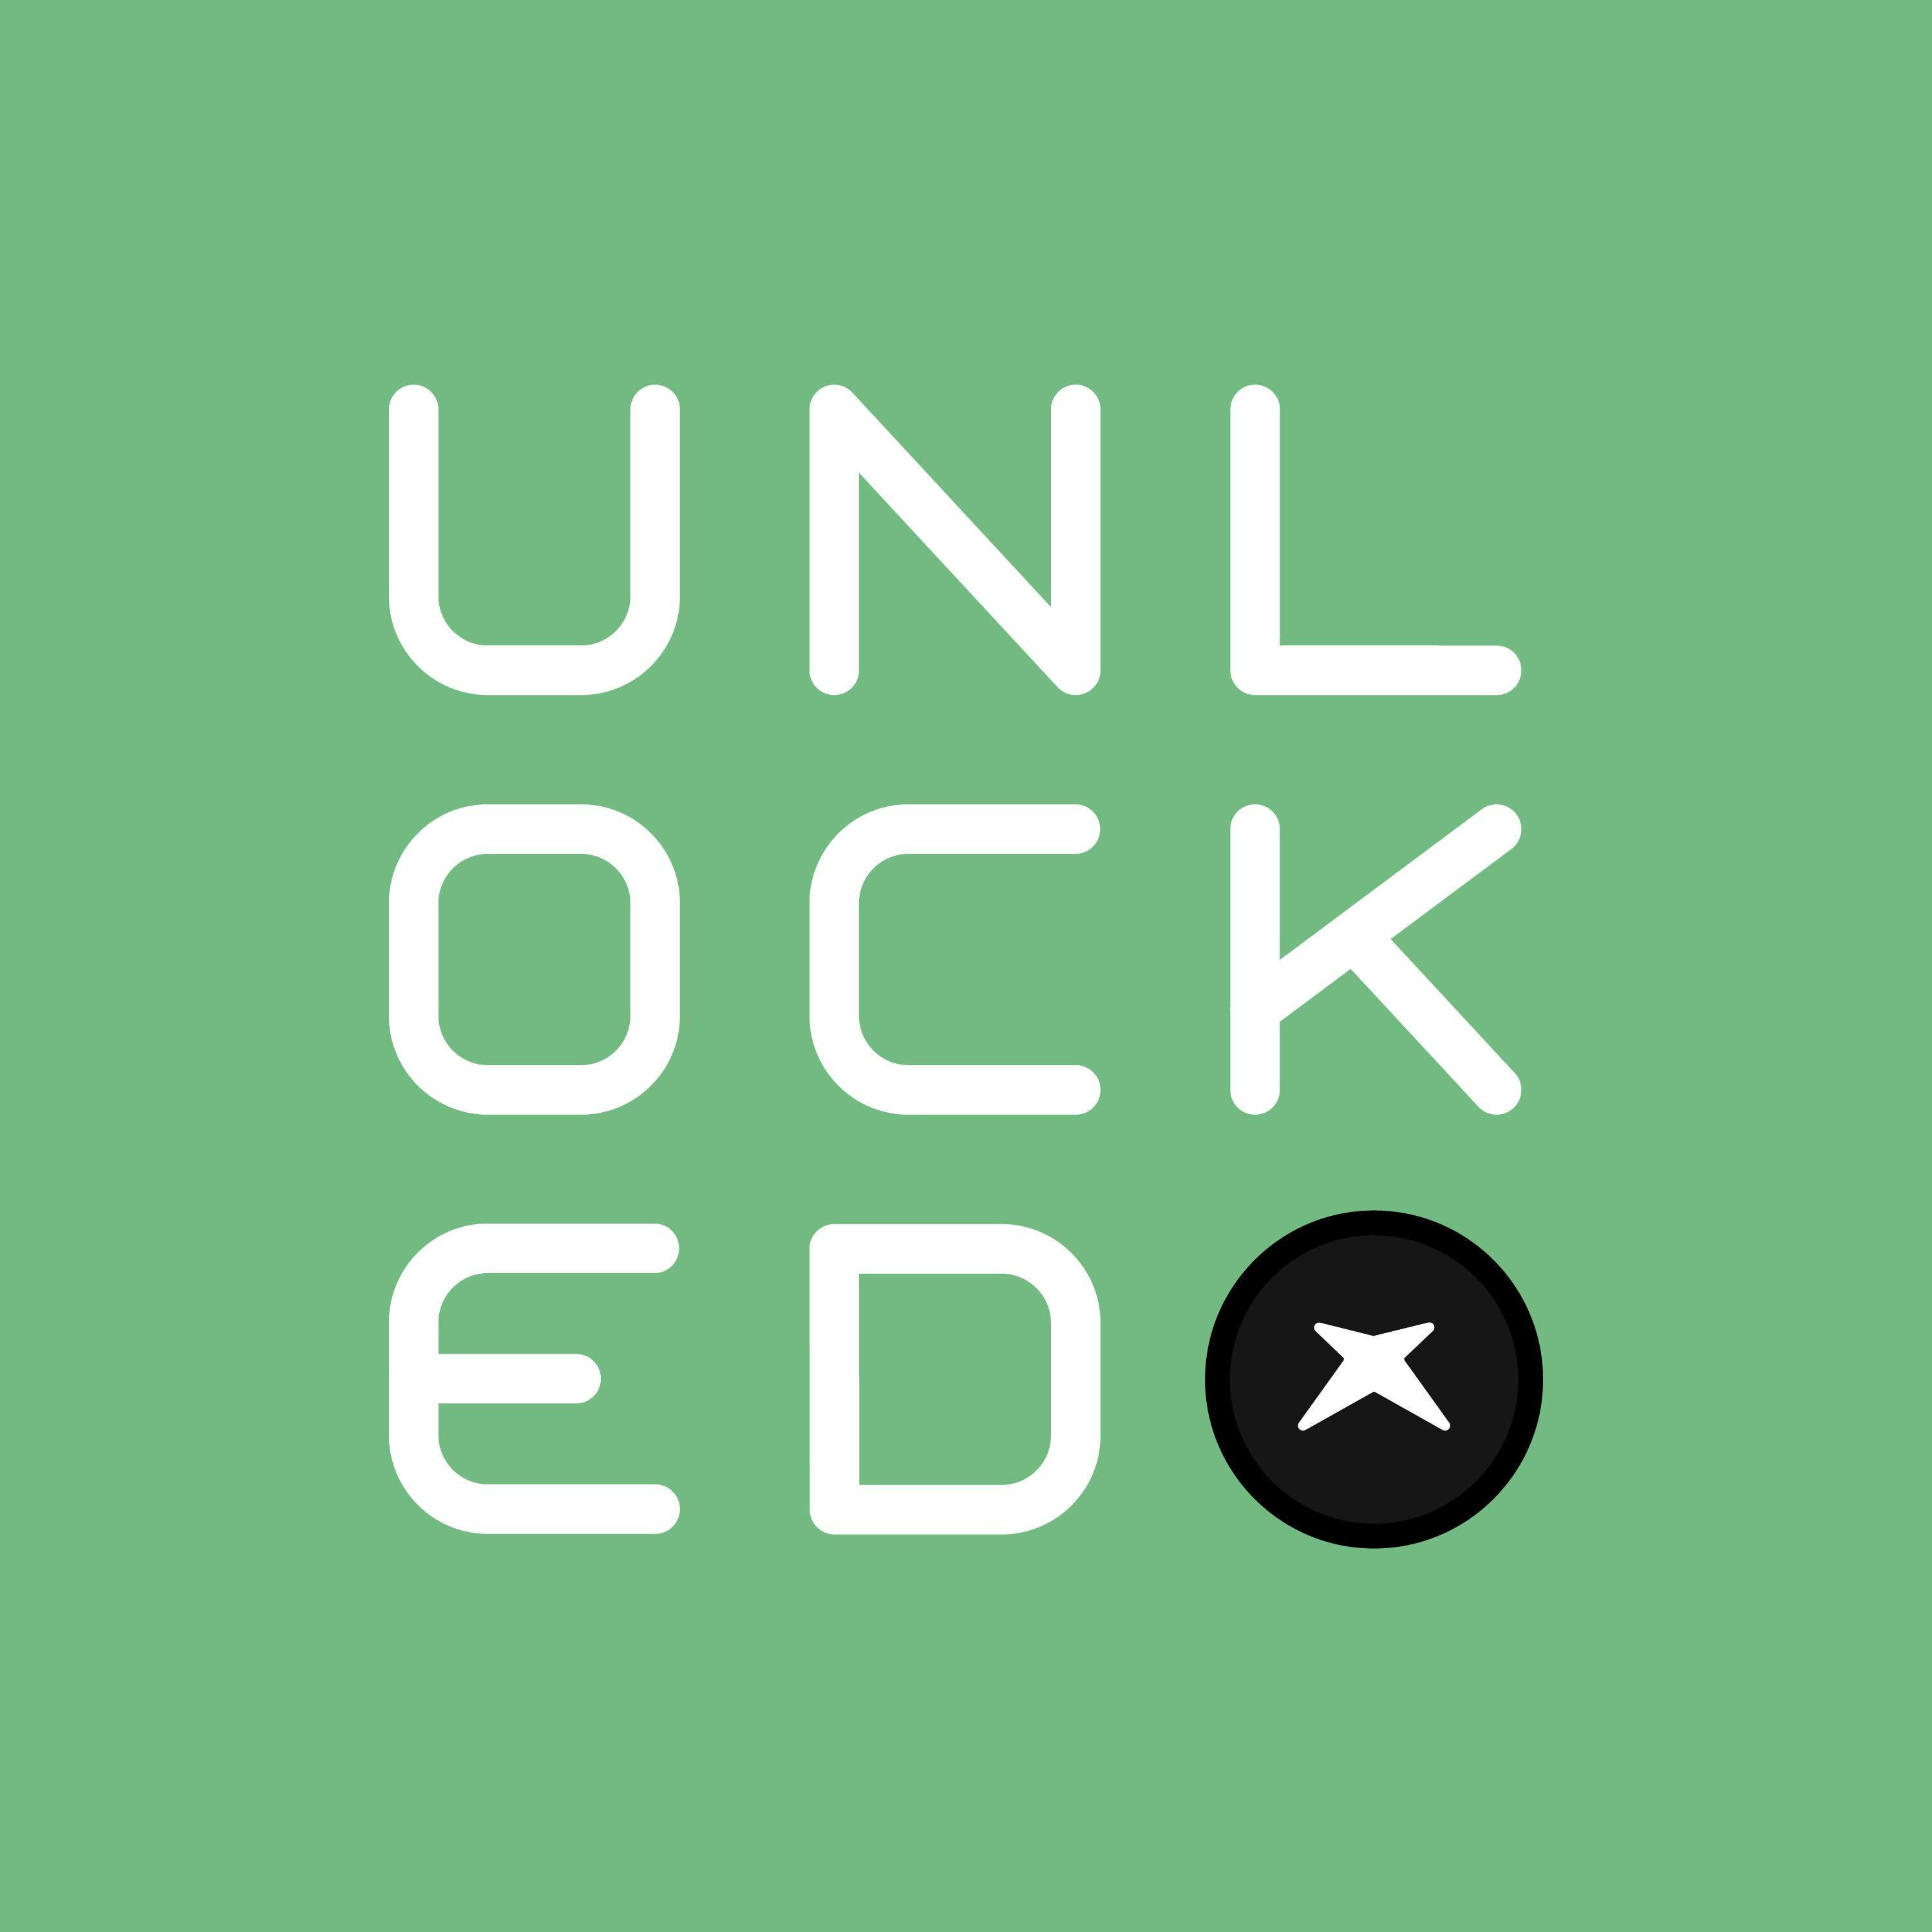 Podcast Unlocked Episode 163: Michael Condrey Interview